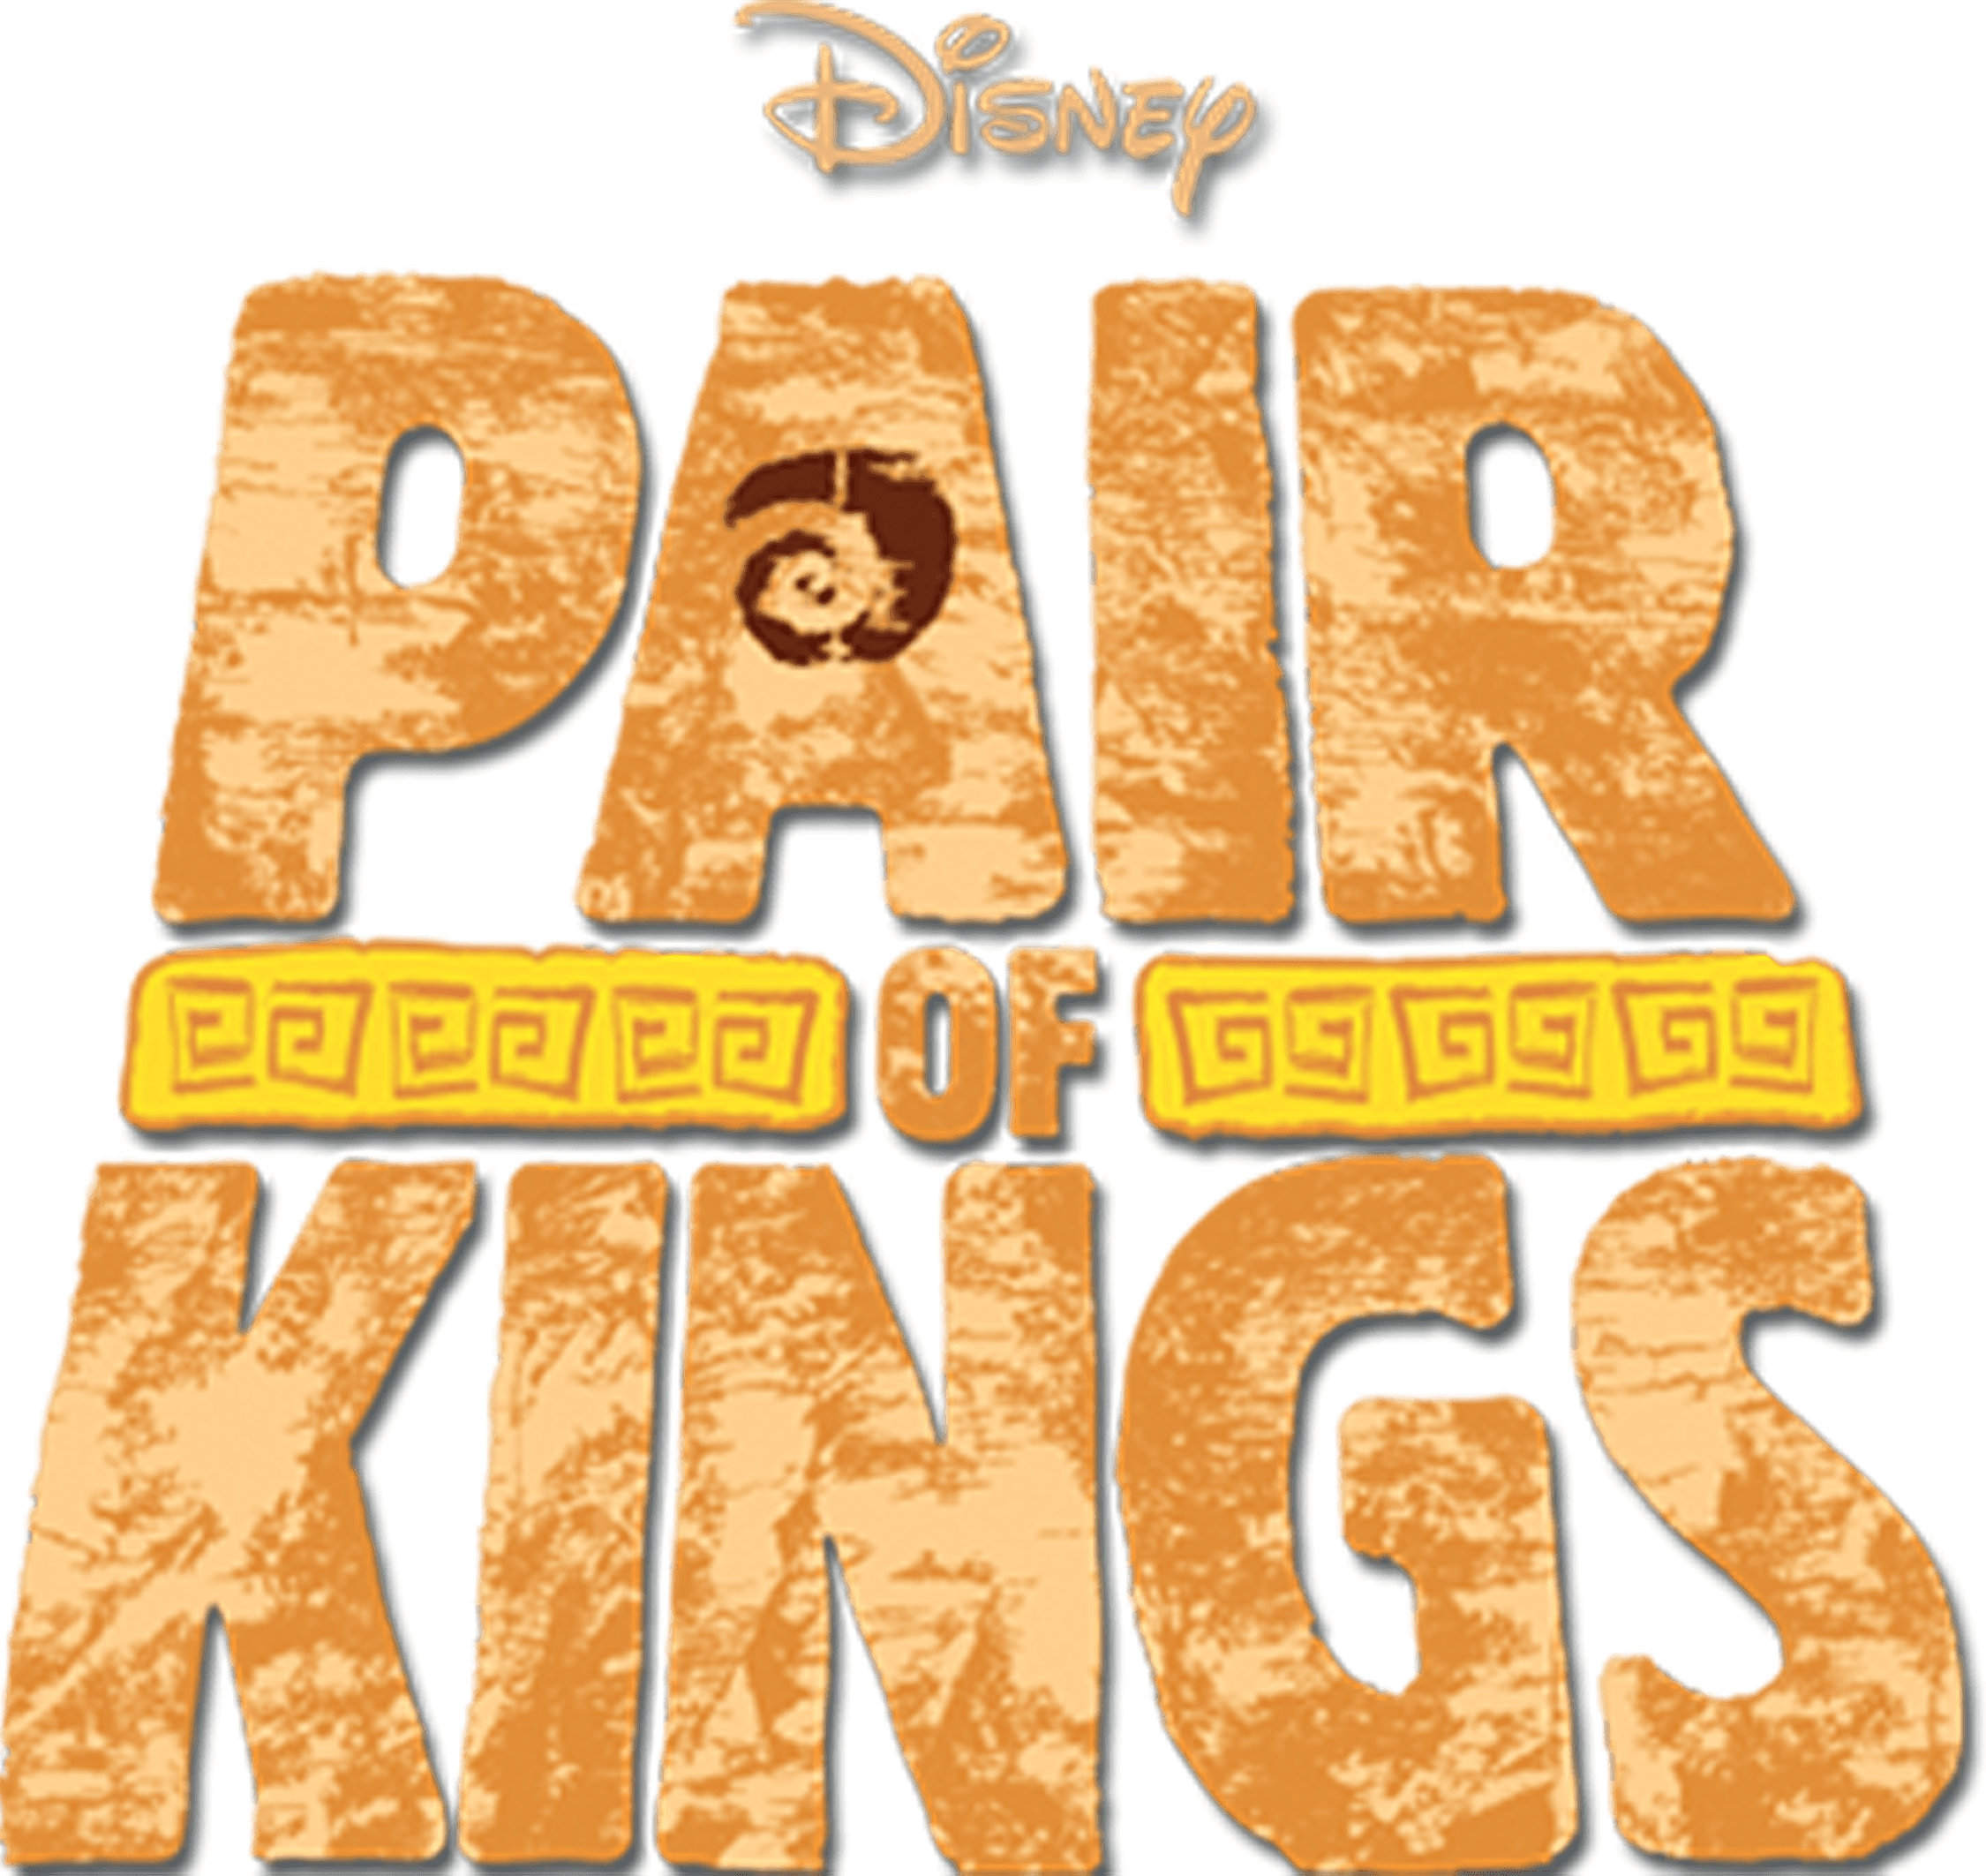 Pair of Kings logo